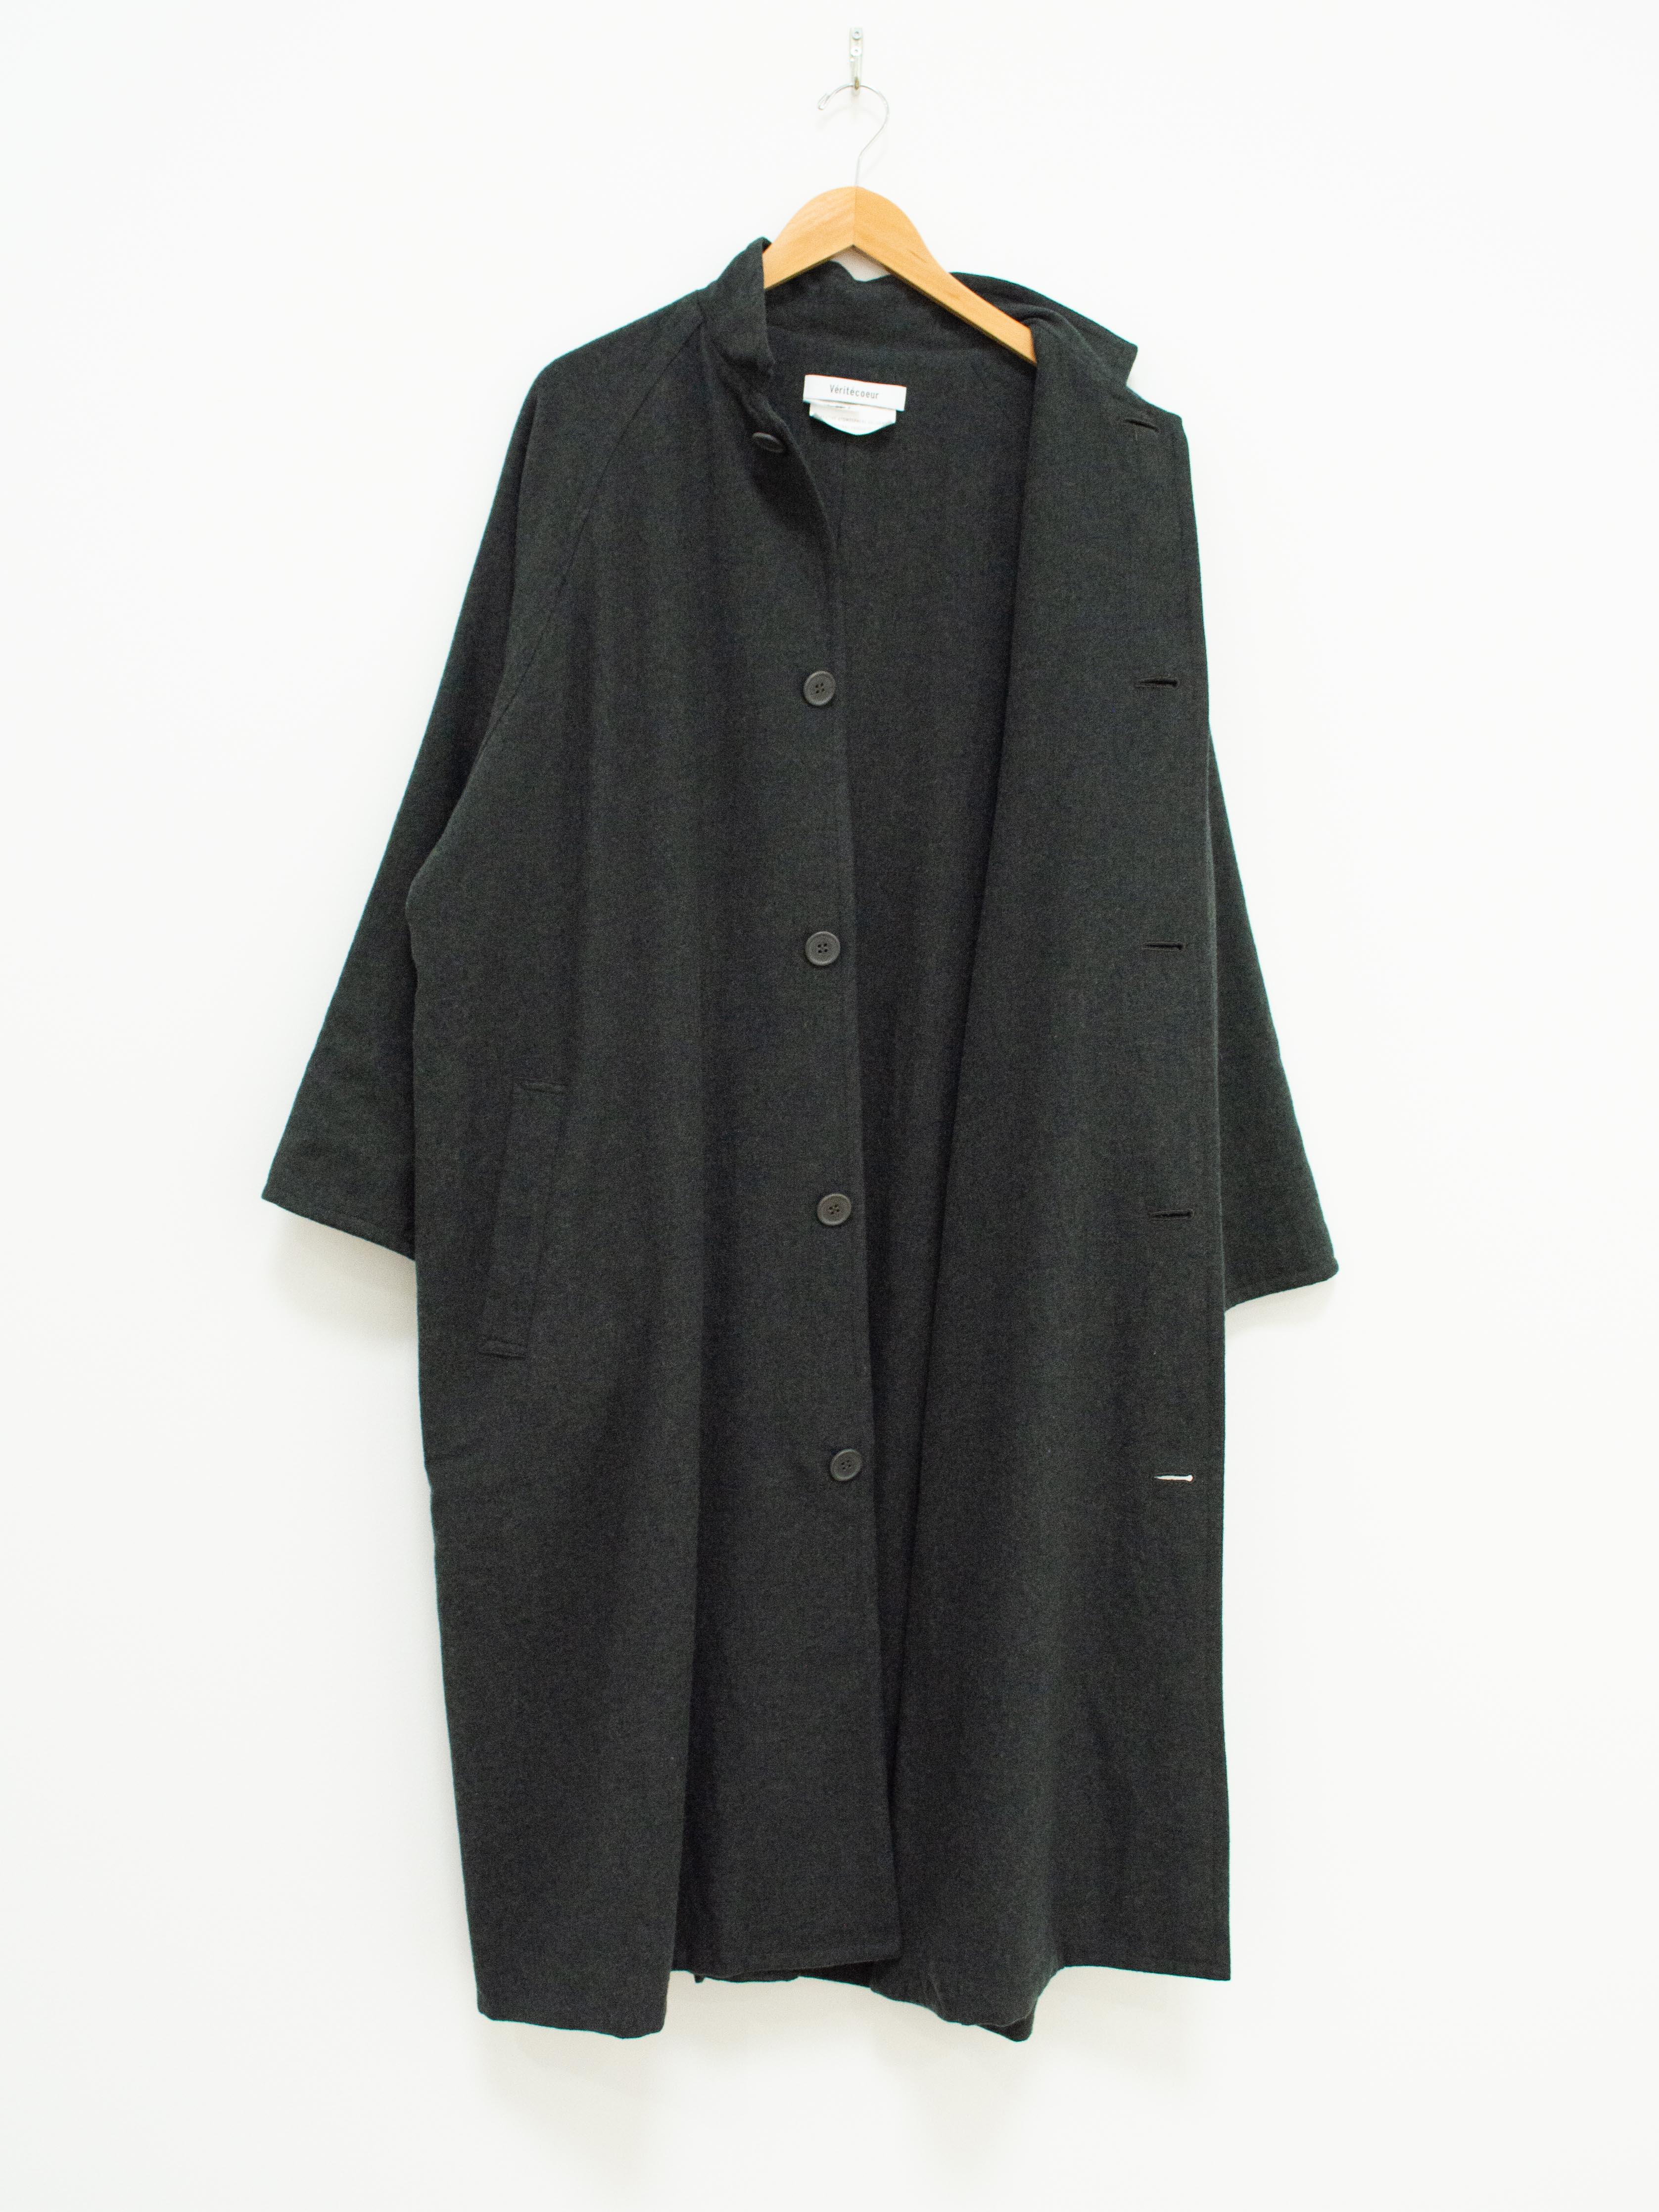 Namu Shop - Veritecoeur Wool Stand Collar Coat - Moss Green